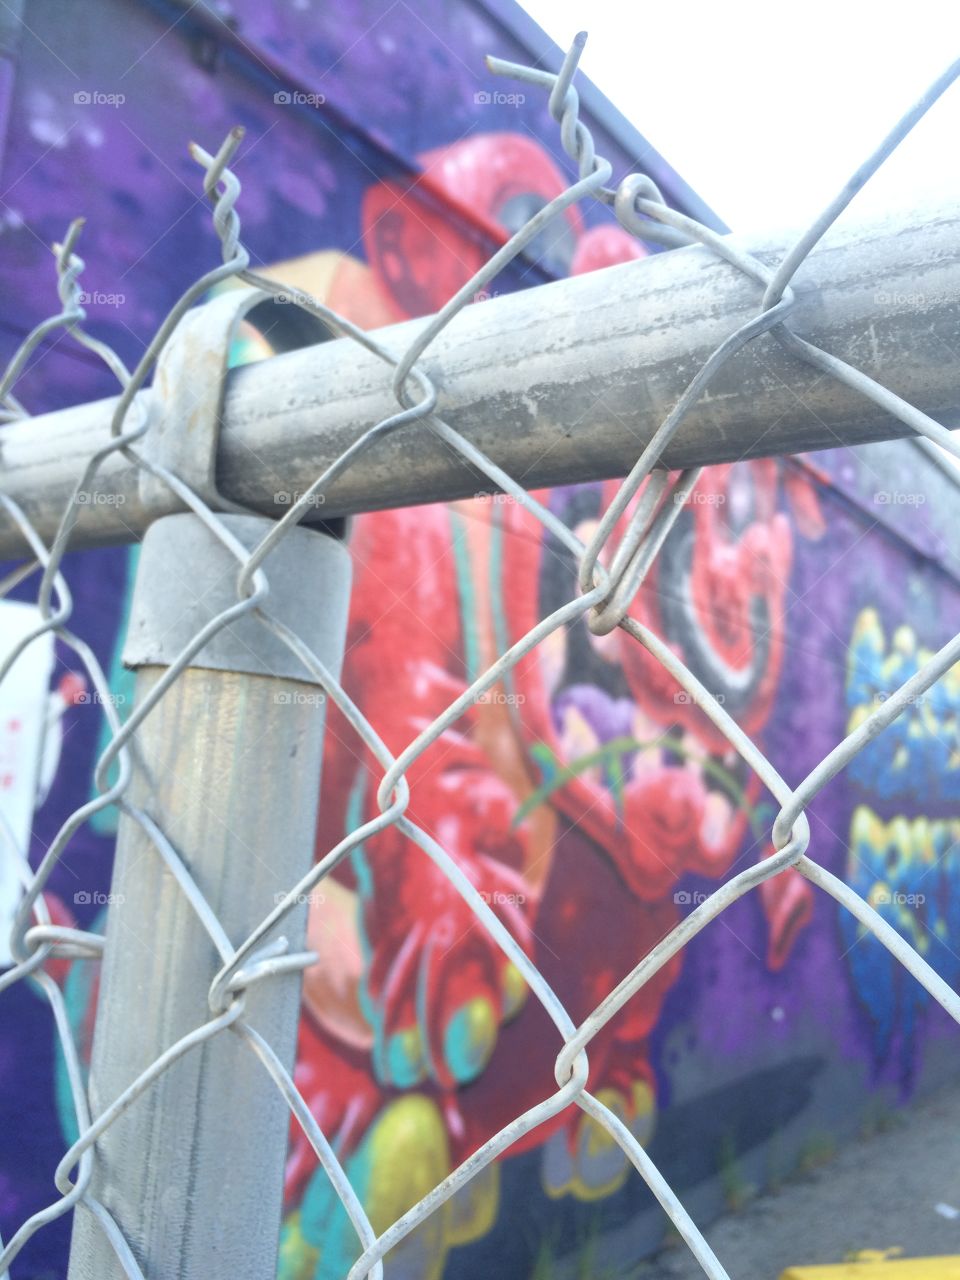 Graffiti behind fence 